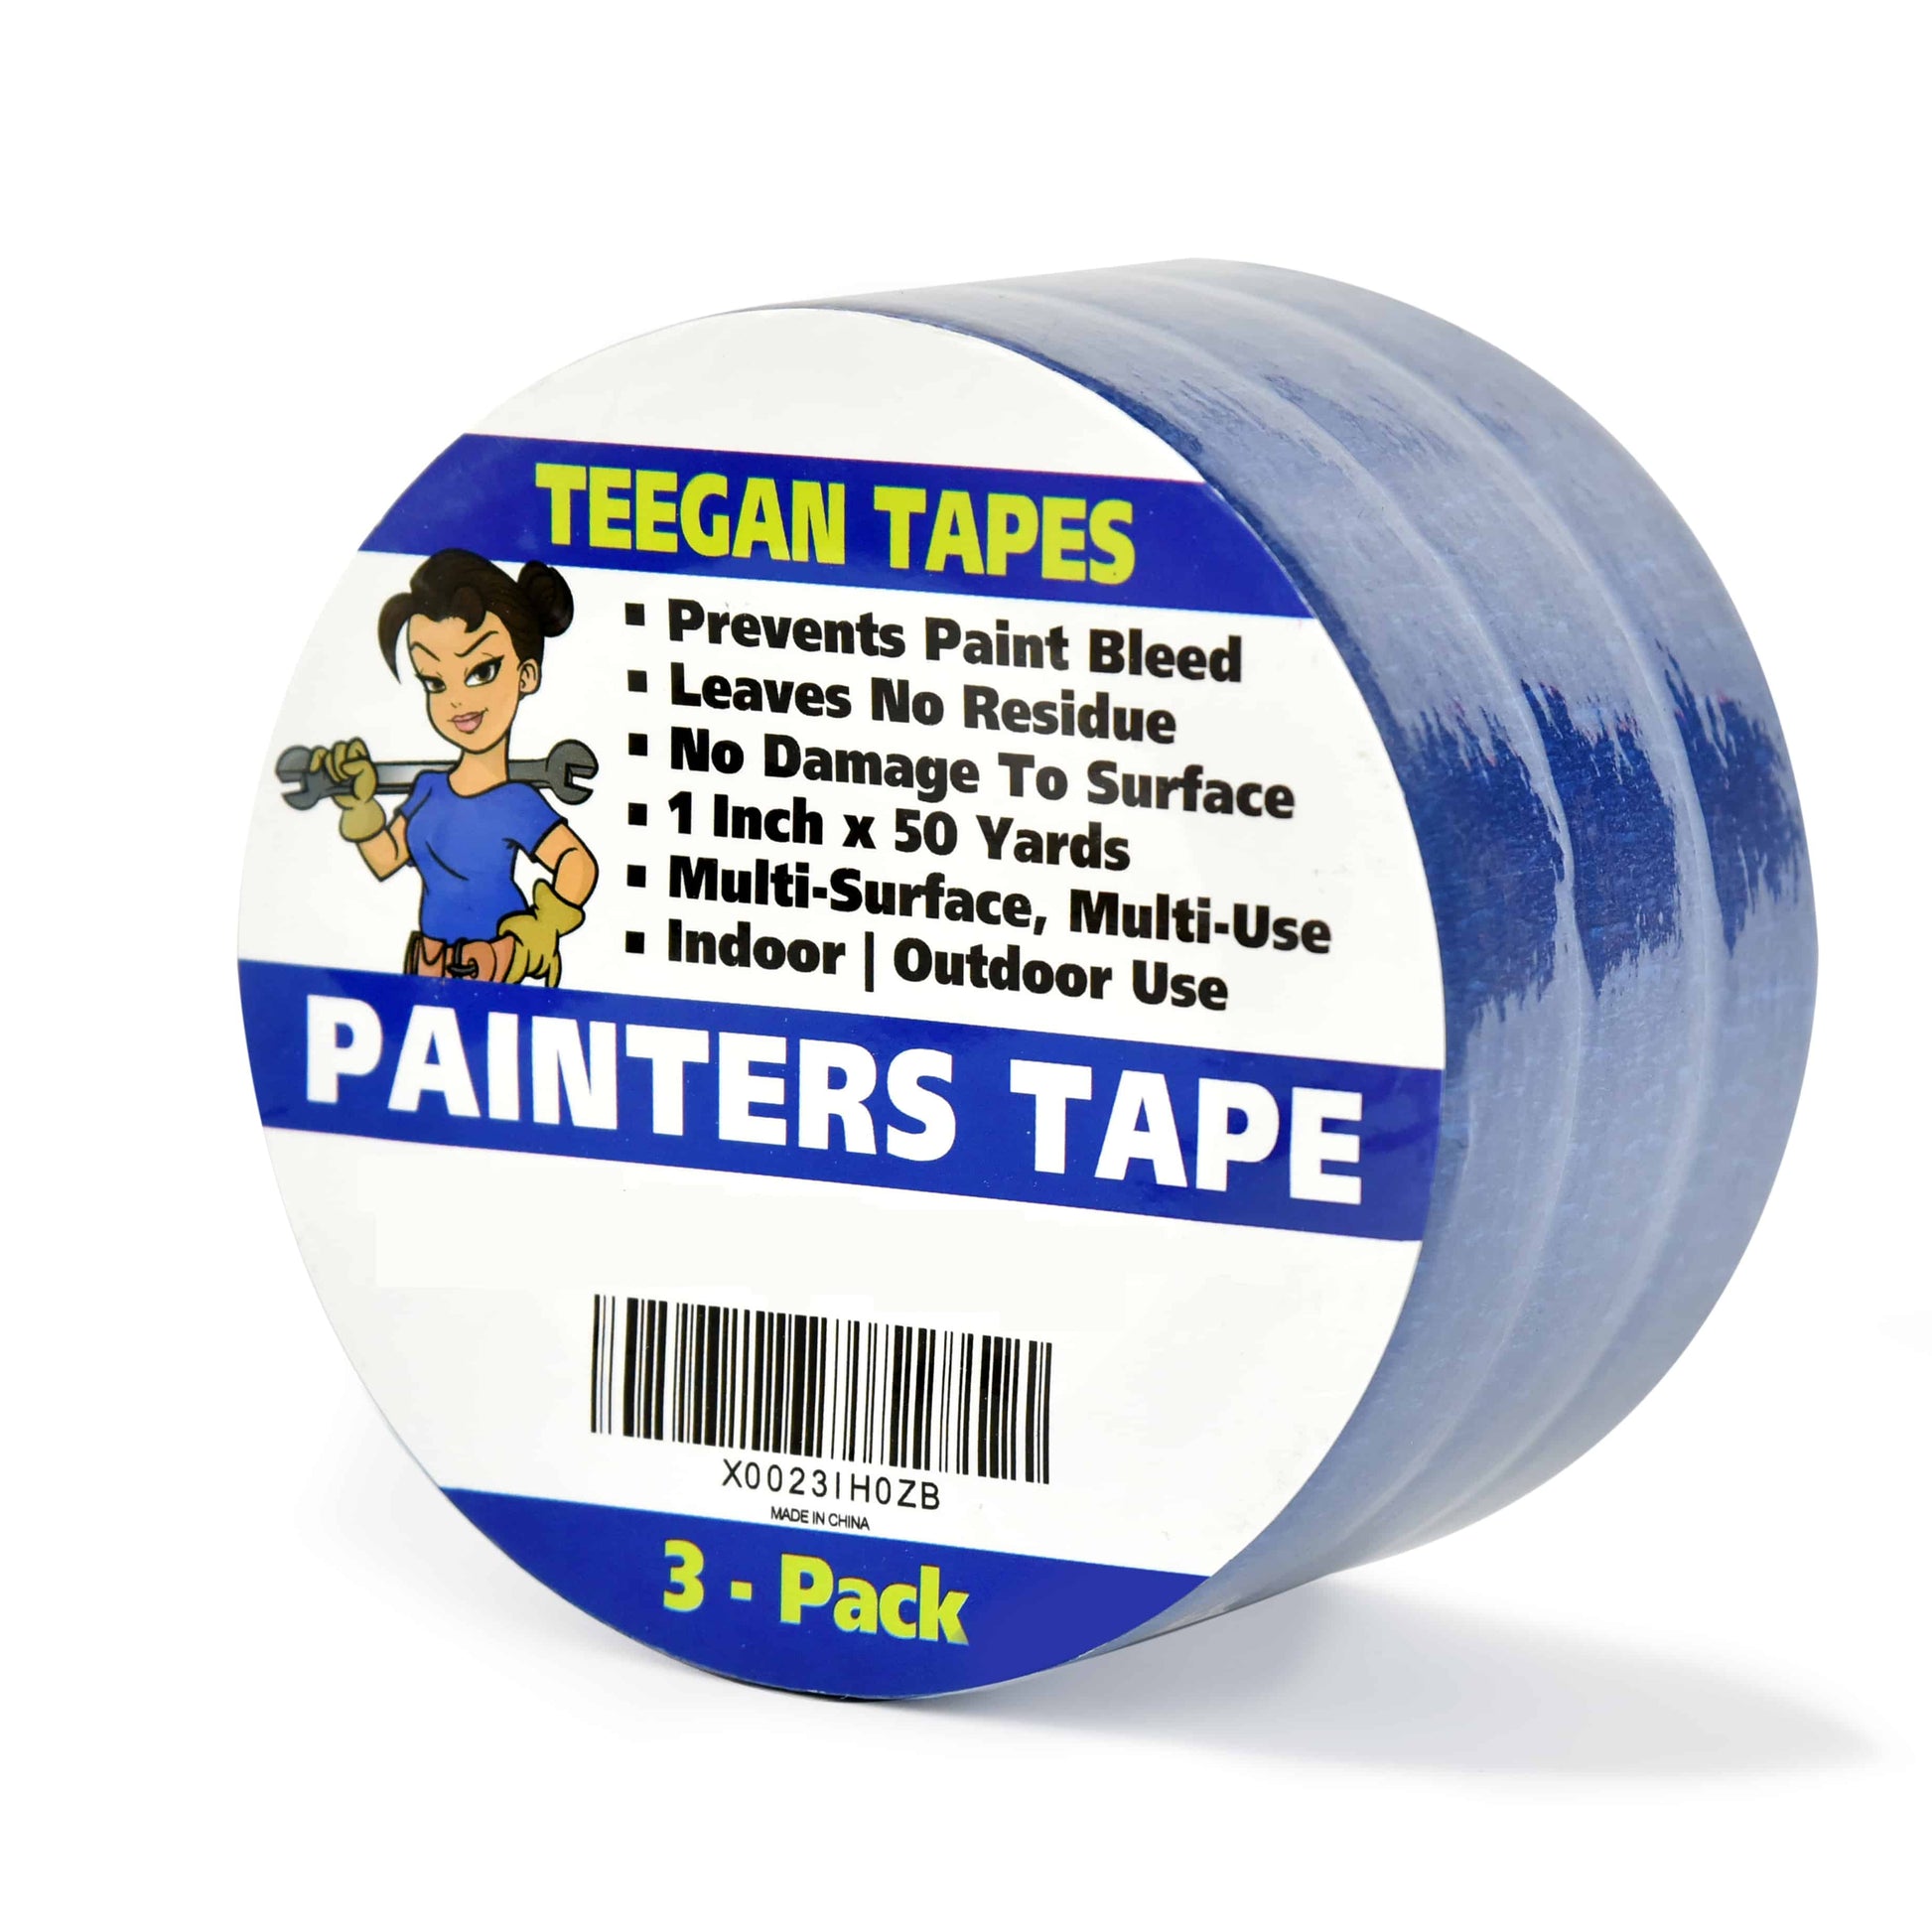 3 Creative Painter's Tape Ideas - Painter's Tape Video Tutorial